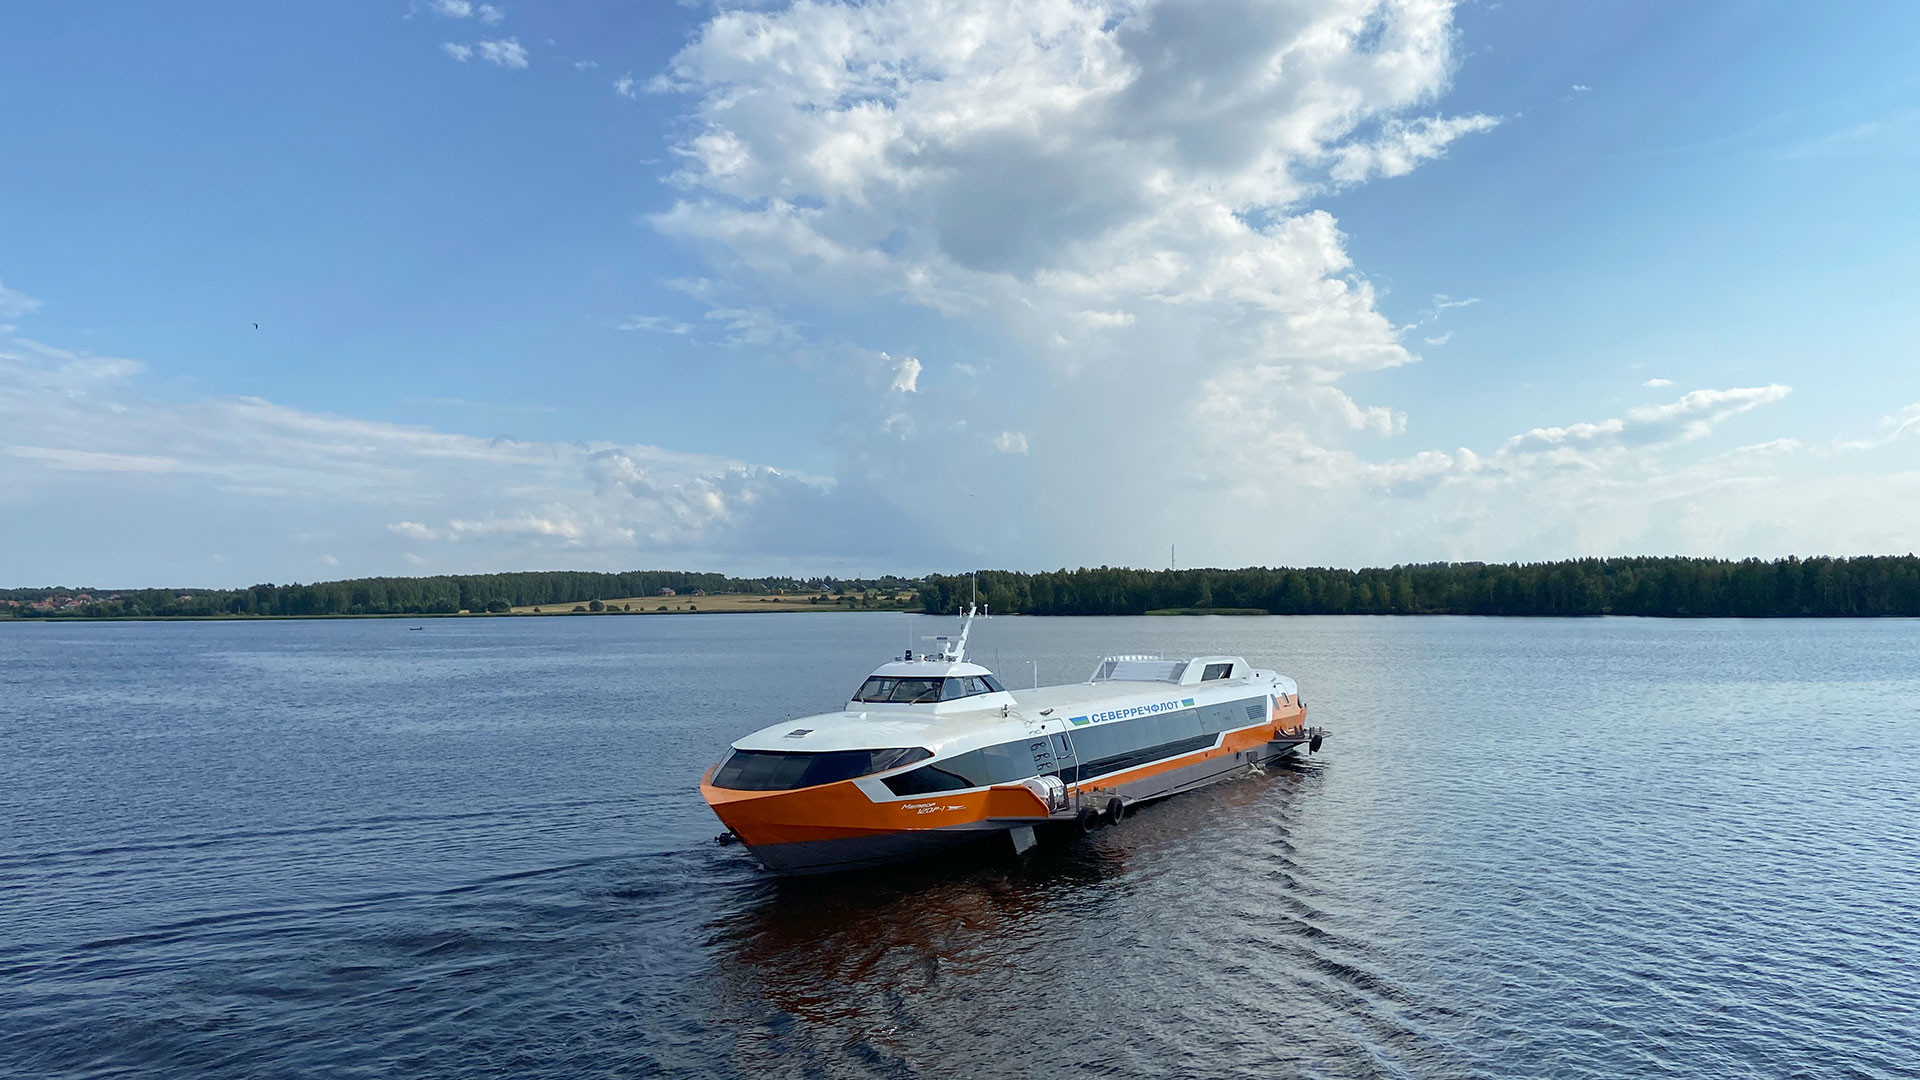 Rusija, Nižegorodska oblast, 3 kolovoza 2021. Svečano spuštanje na vodu broda s podvodnim krilima "Meteor 120R" (brzi putnički brod dizajniran za prijevoz 120 ljudi na udaljenosti do 600 km).